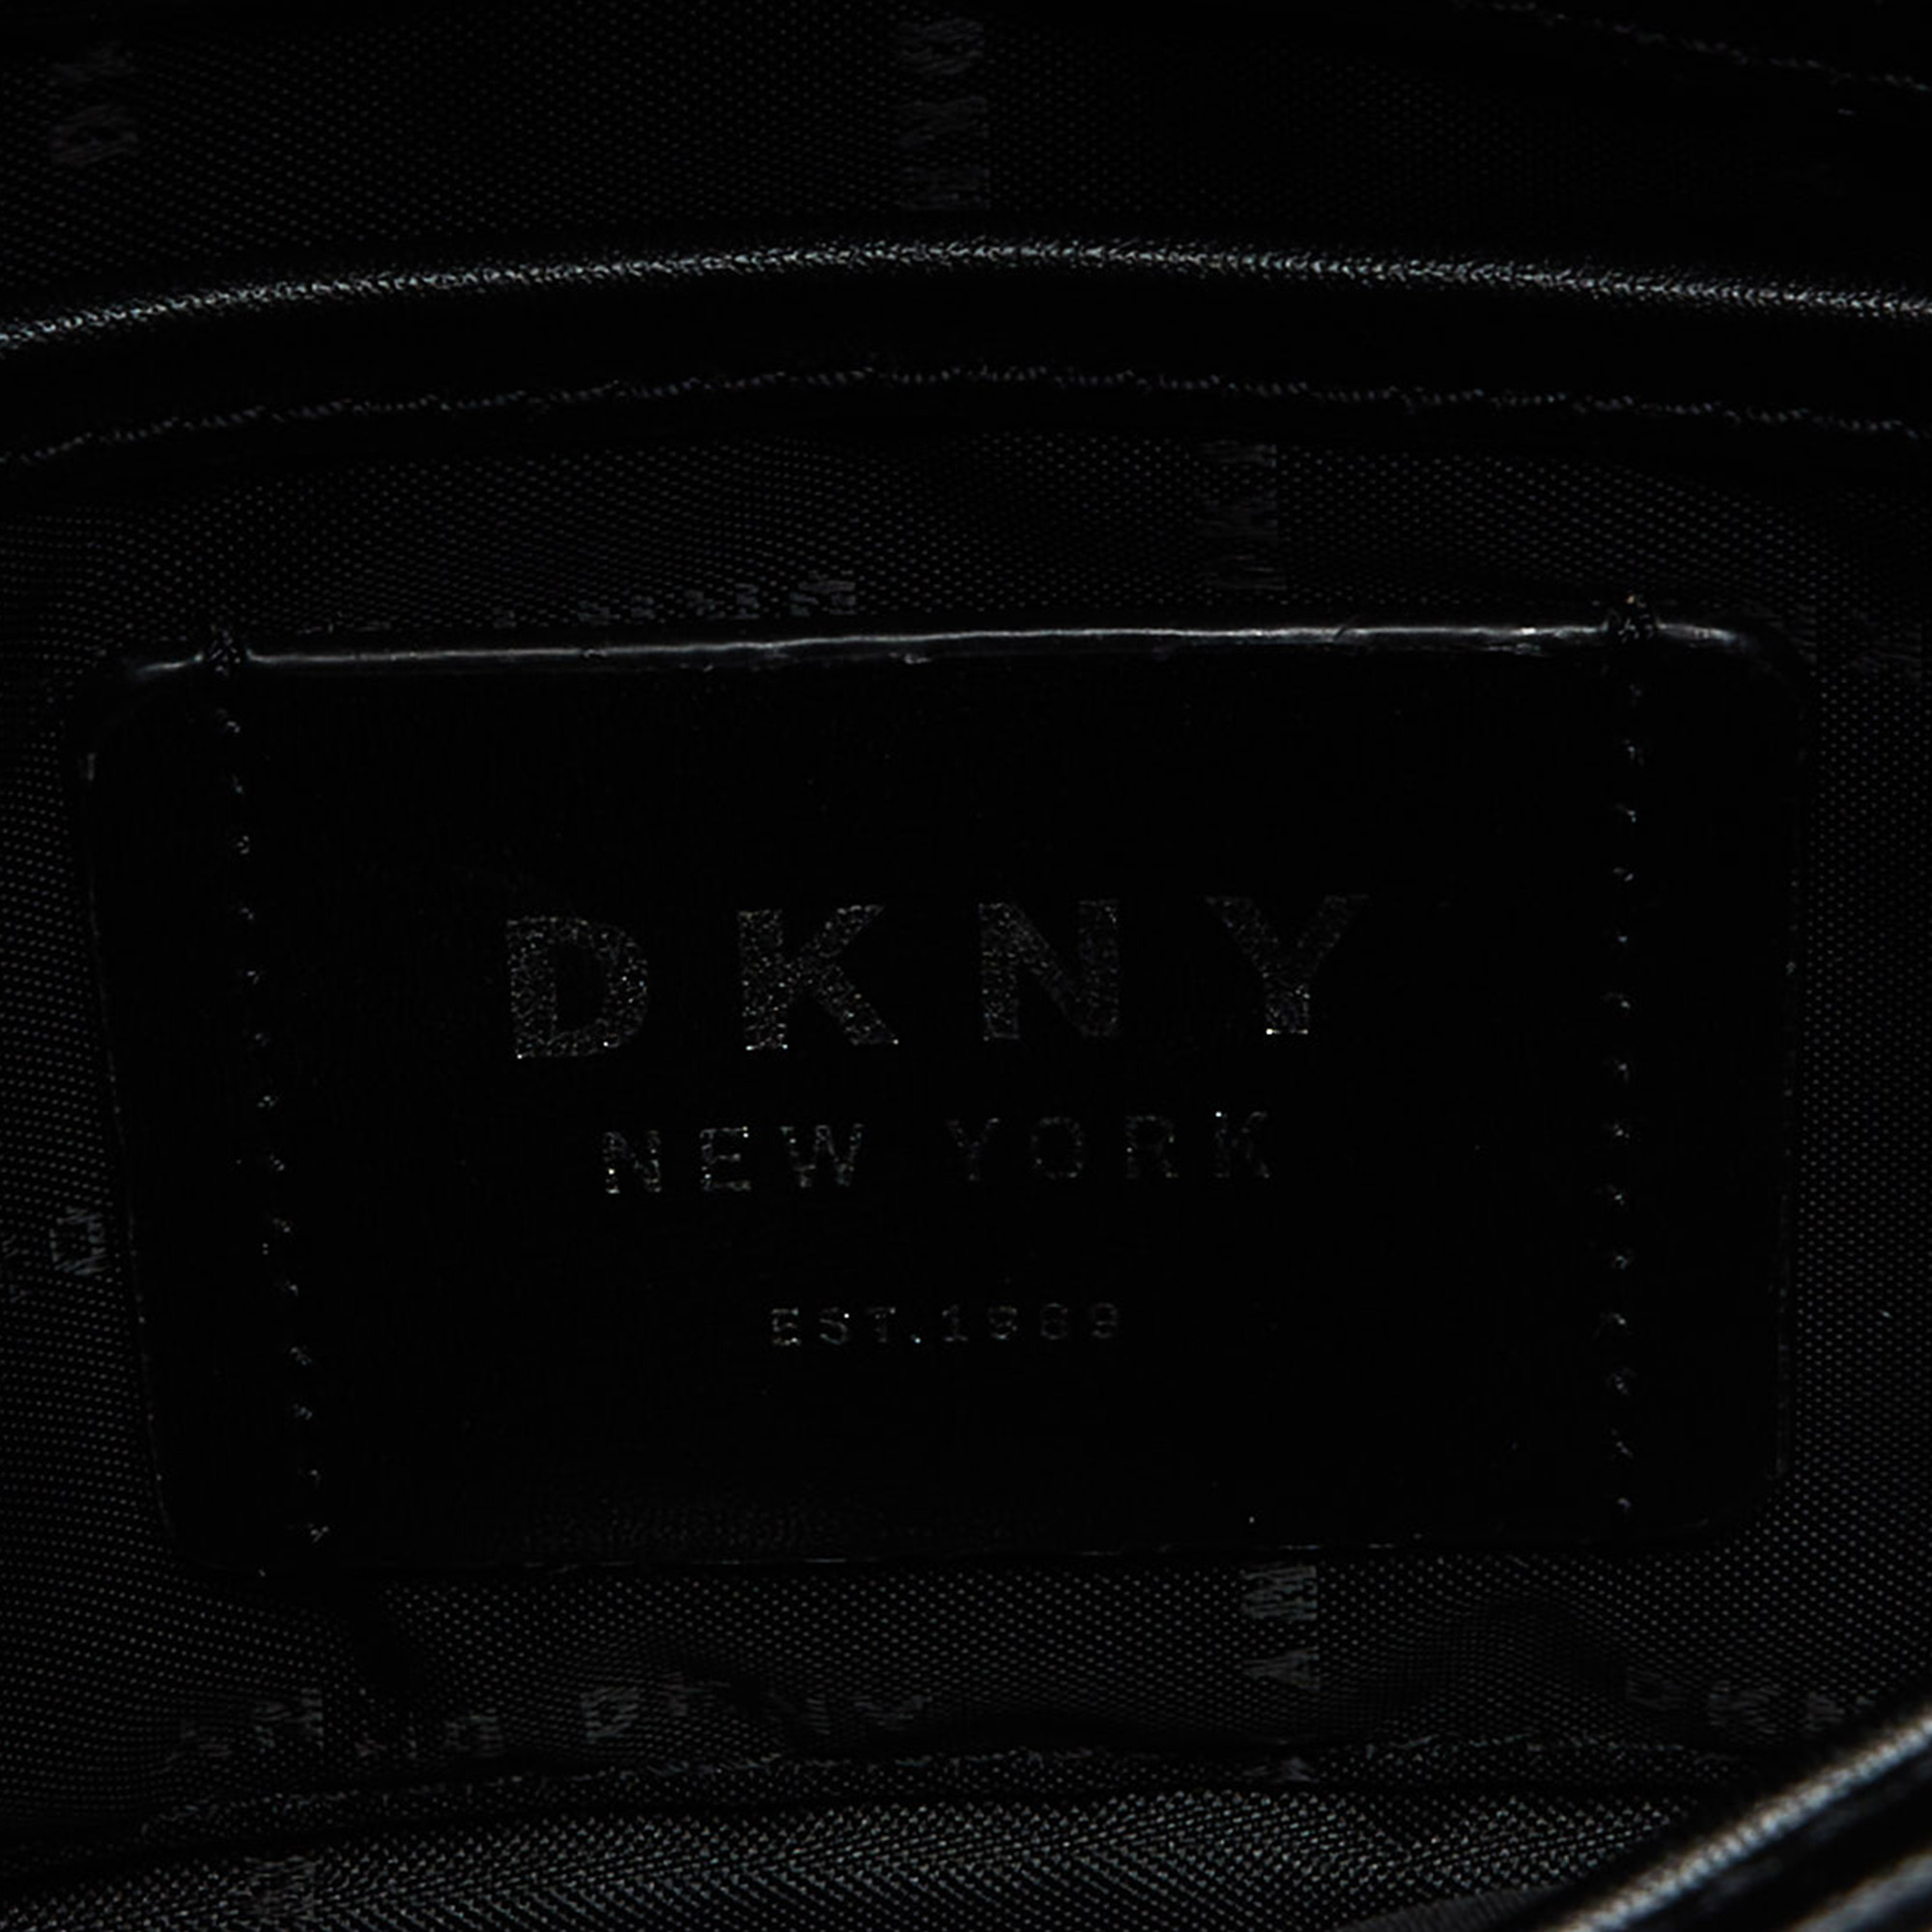 DKNY Black Croc Embossed Leather Flap Top Handle Bag